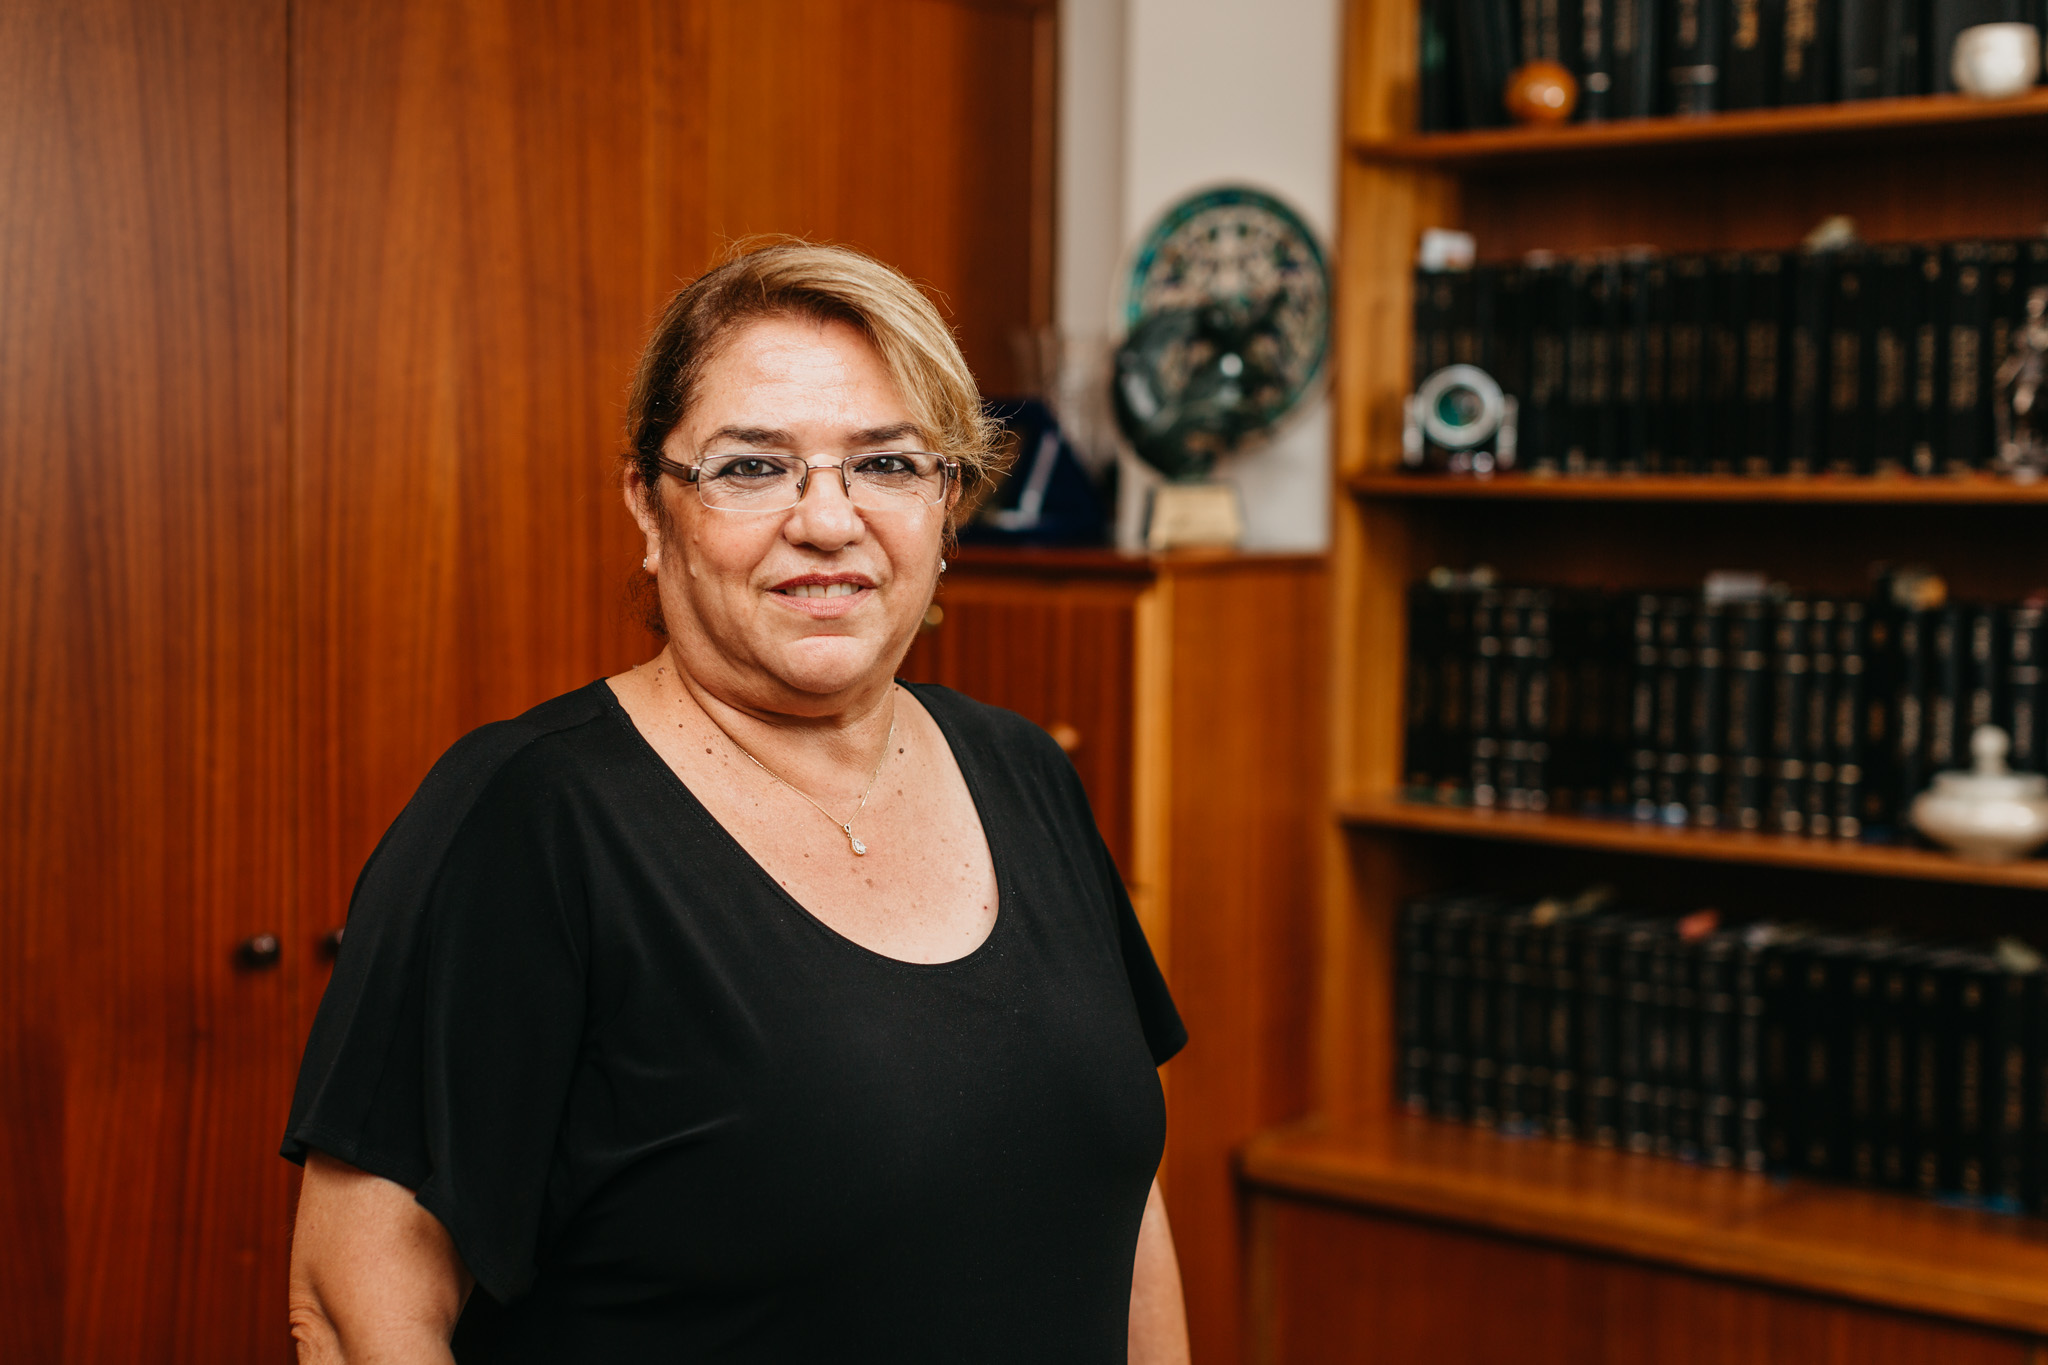 Havva Şanlıtürk is a senior secretary at Erginel Law. She has been working at Erginel Law since 1978. Havva is an expert at inheritance procedure